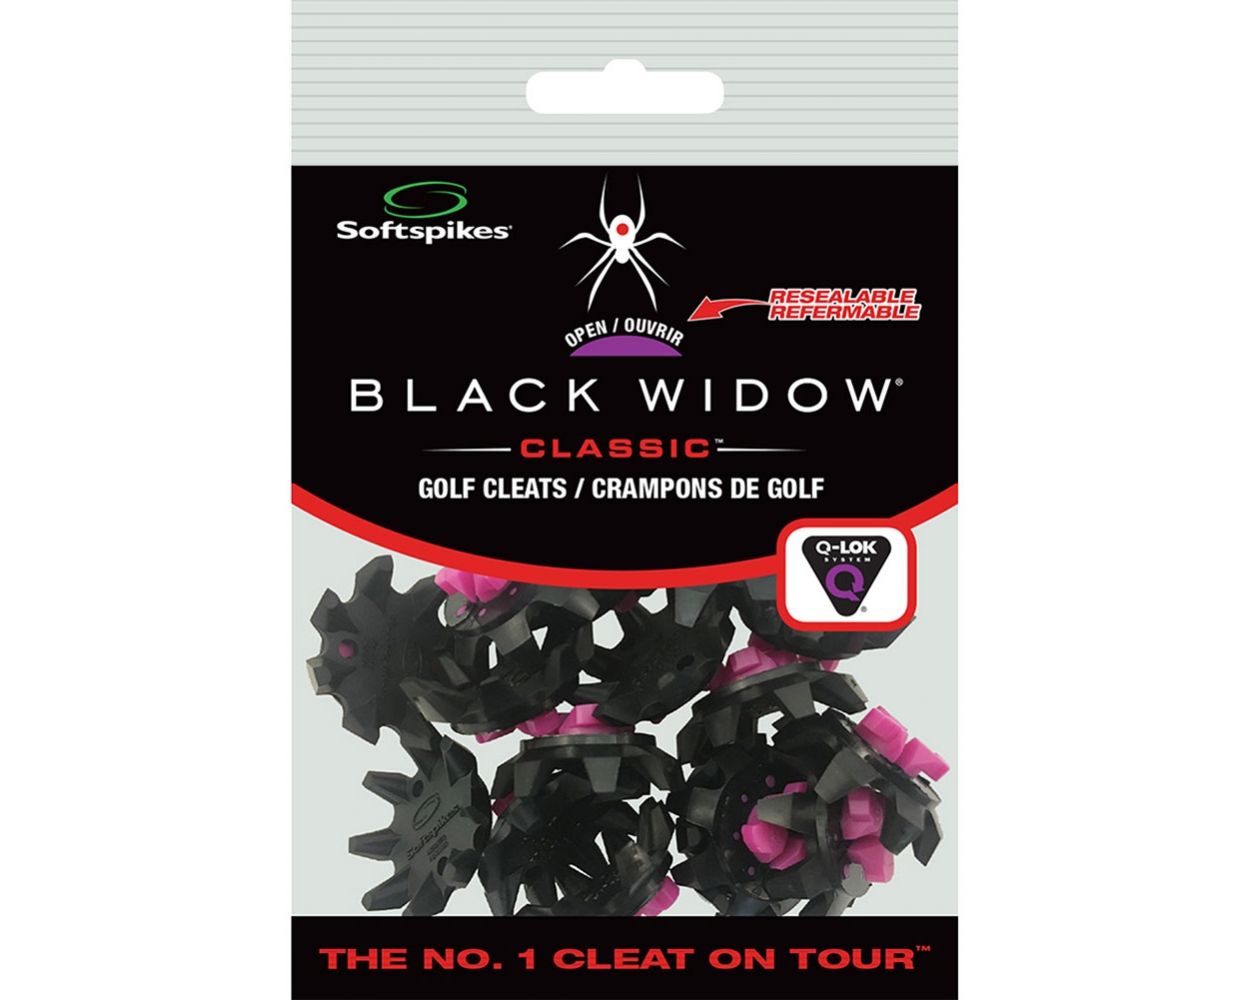 Softspikes Black Widow Q-Lok Golf Cleats